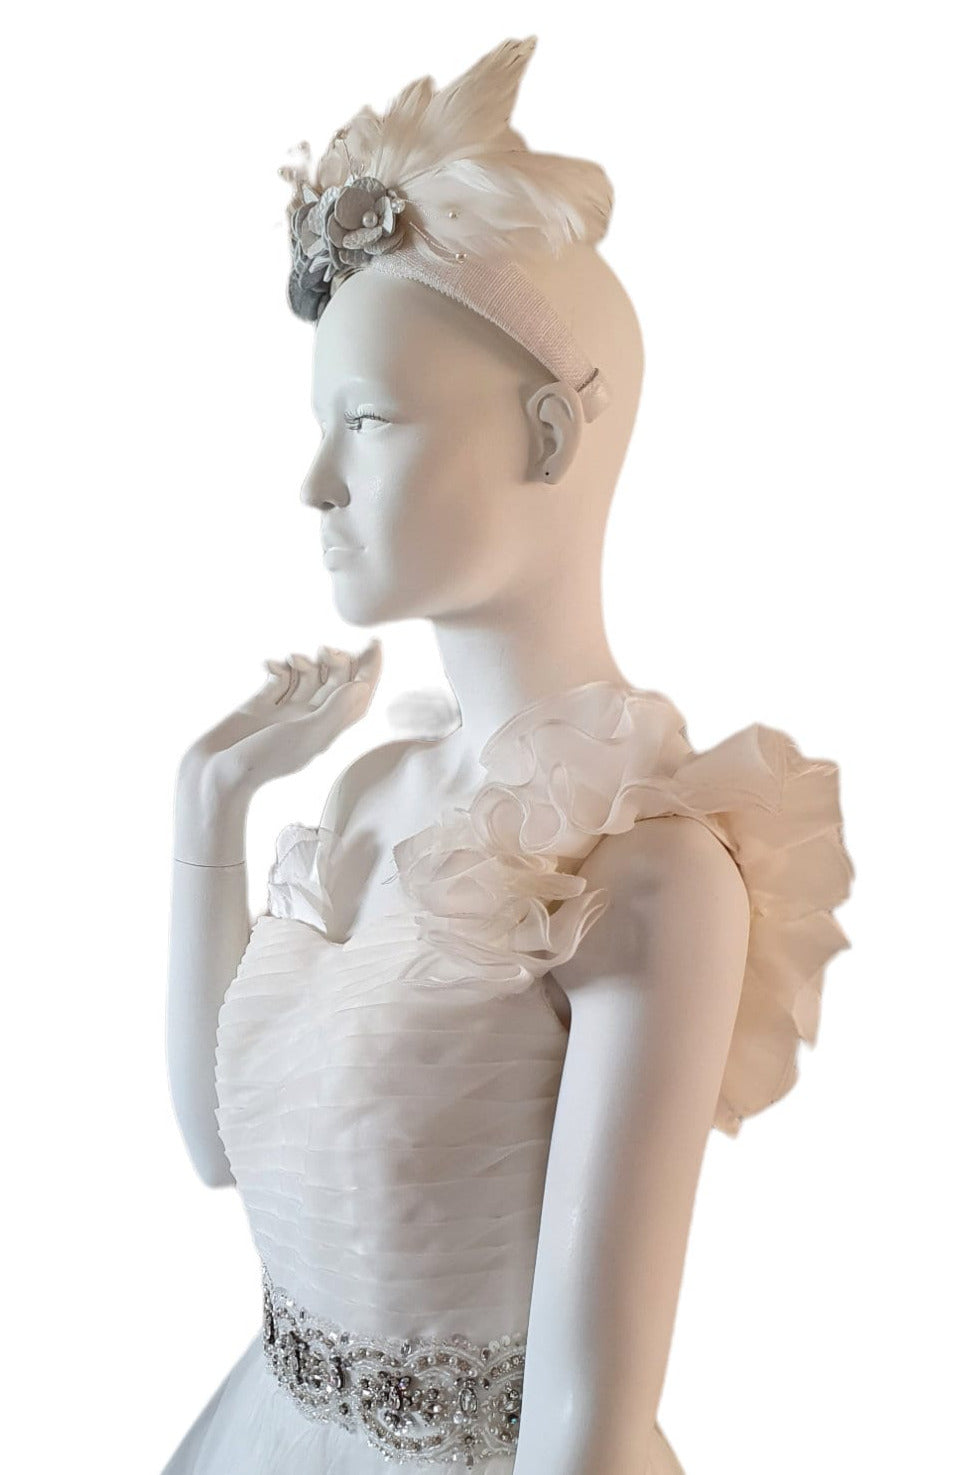 Handmade white Headband from natural leather with swan feathers - Elegant headband, wedding headband, bridal tiara special occasion.